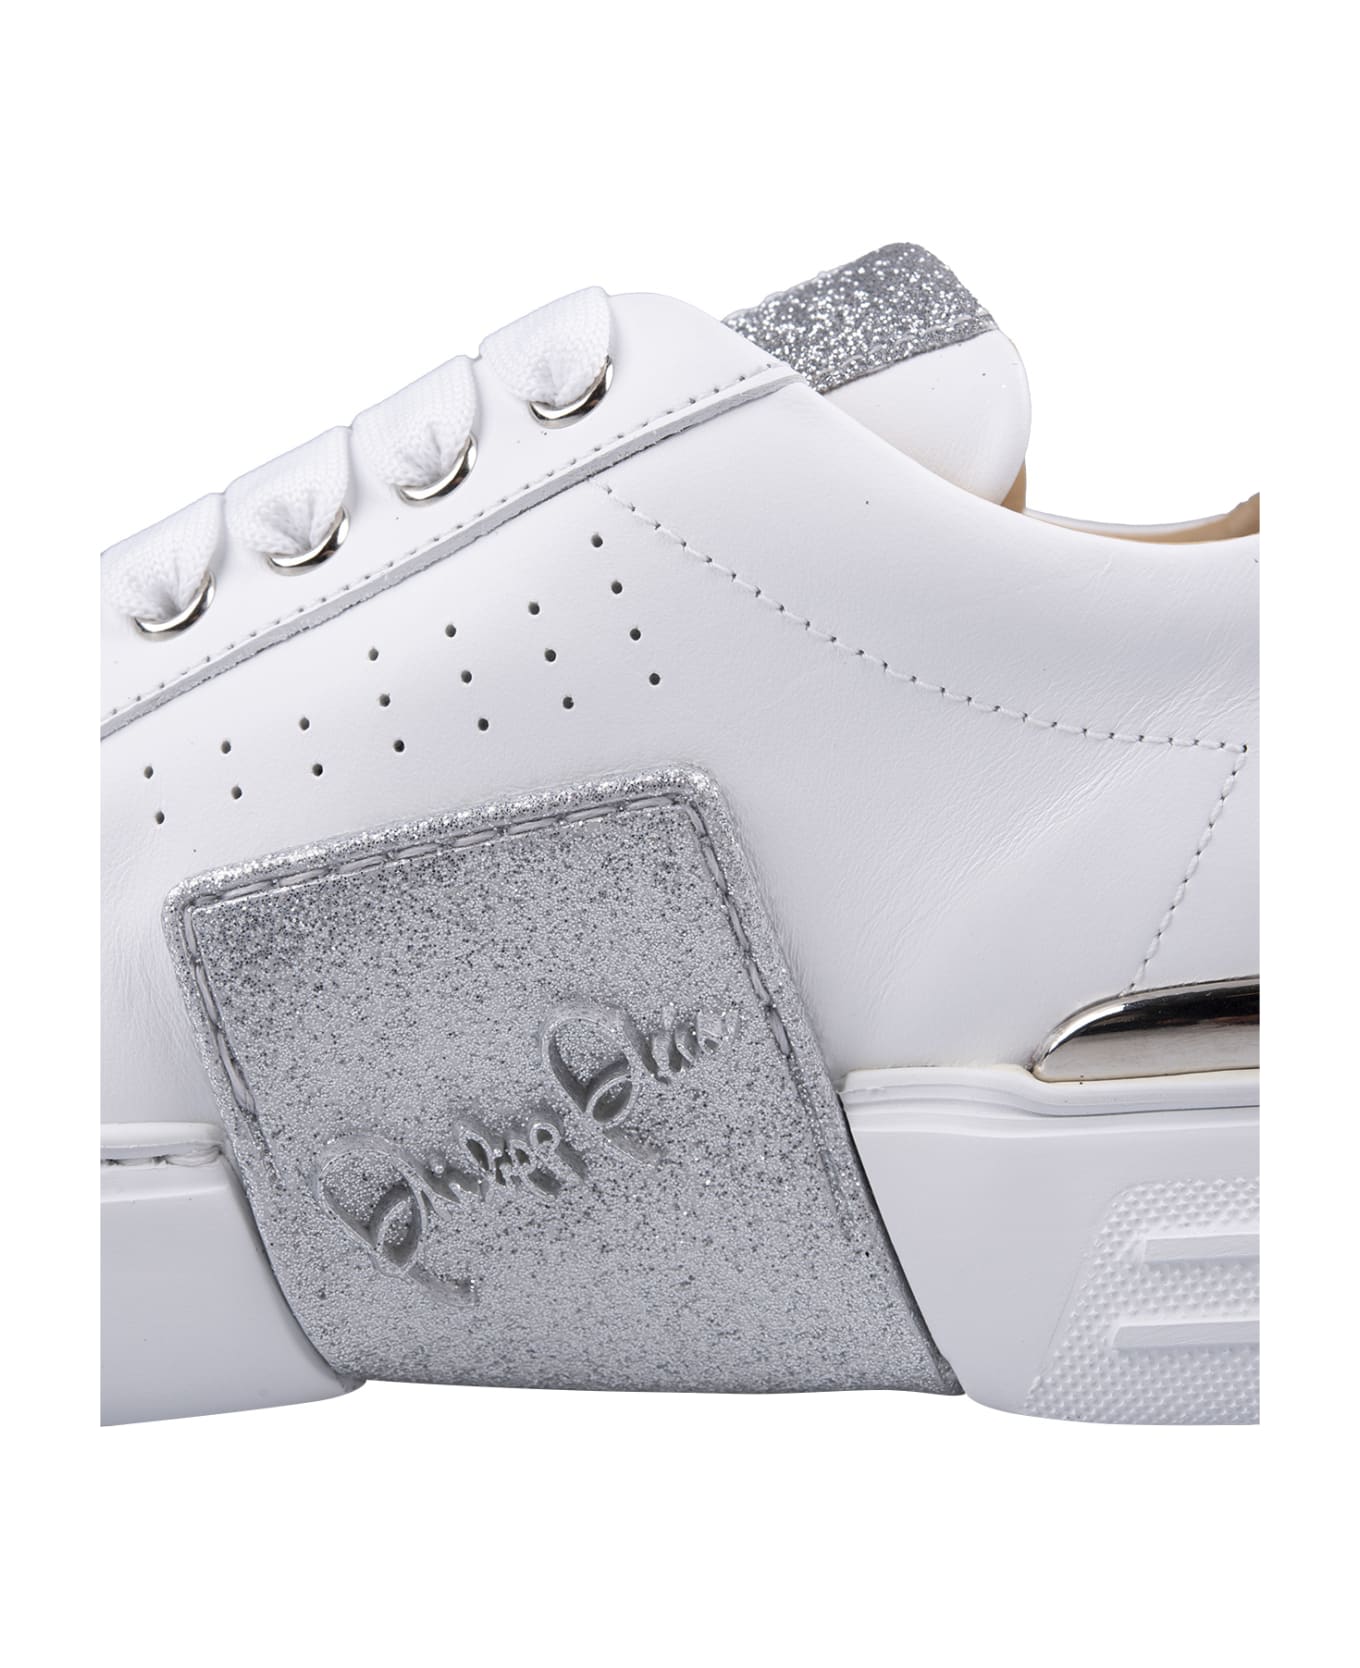 Philipp Plein White And Silver Phantom Kick$ Sneakers - Bianco